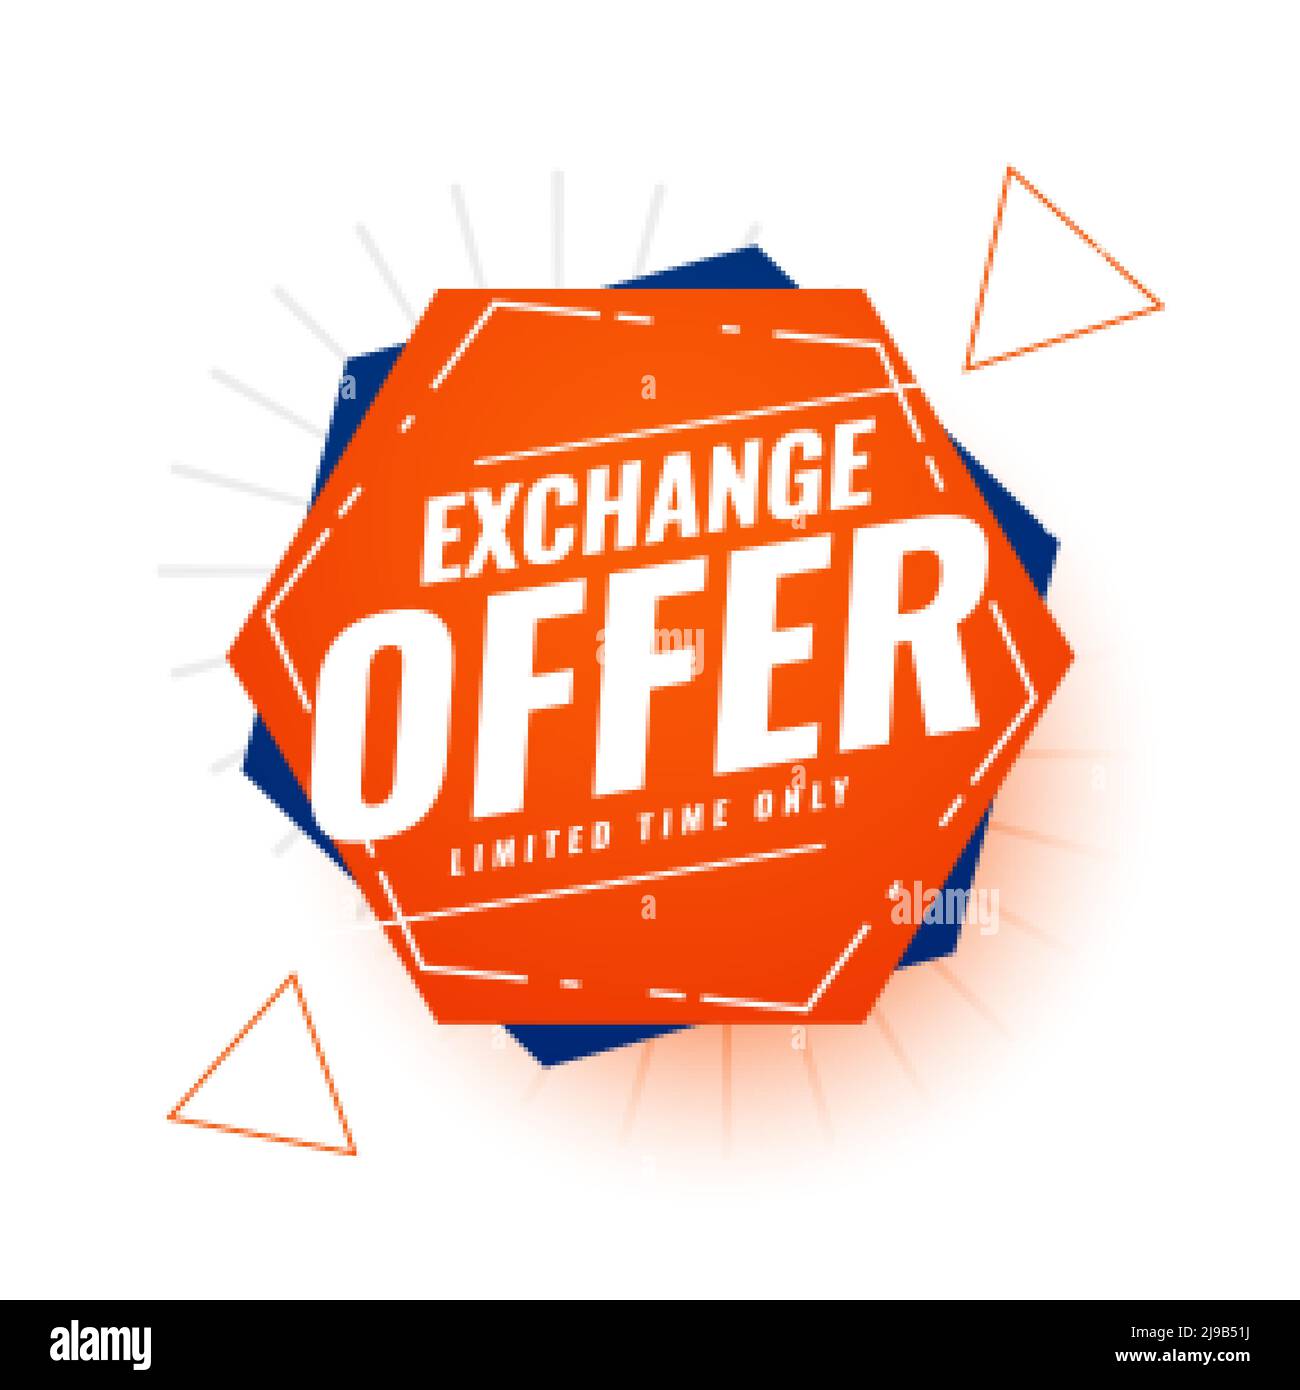 Exchange offer